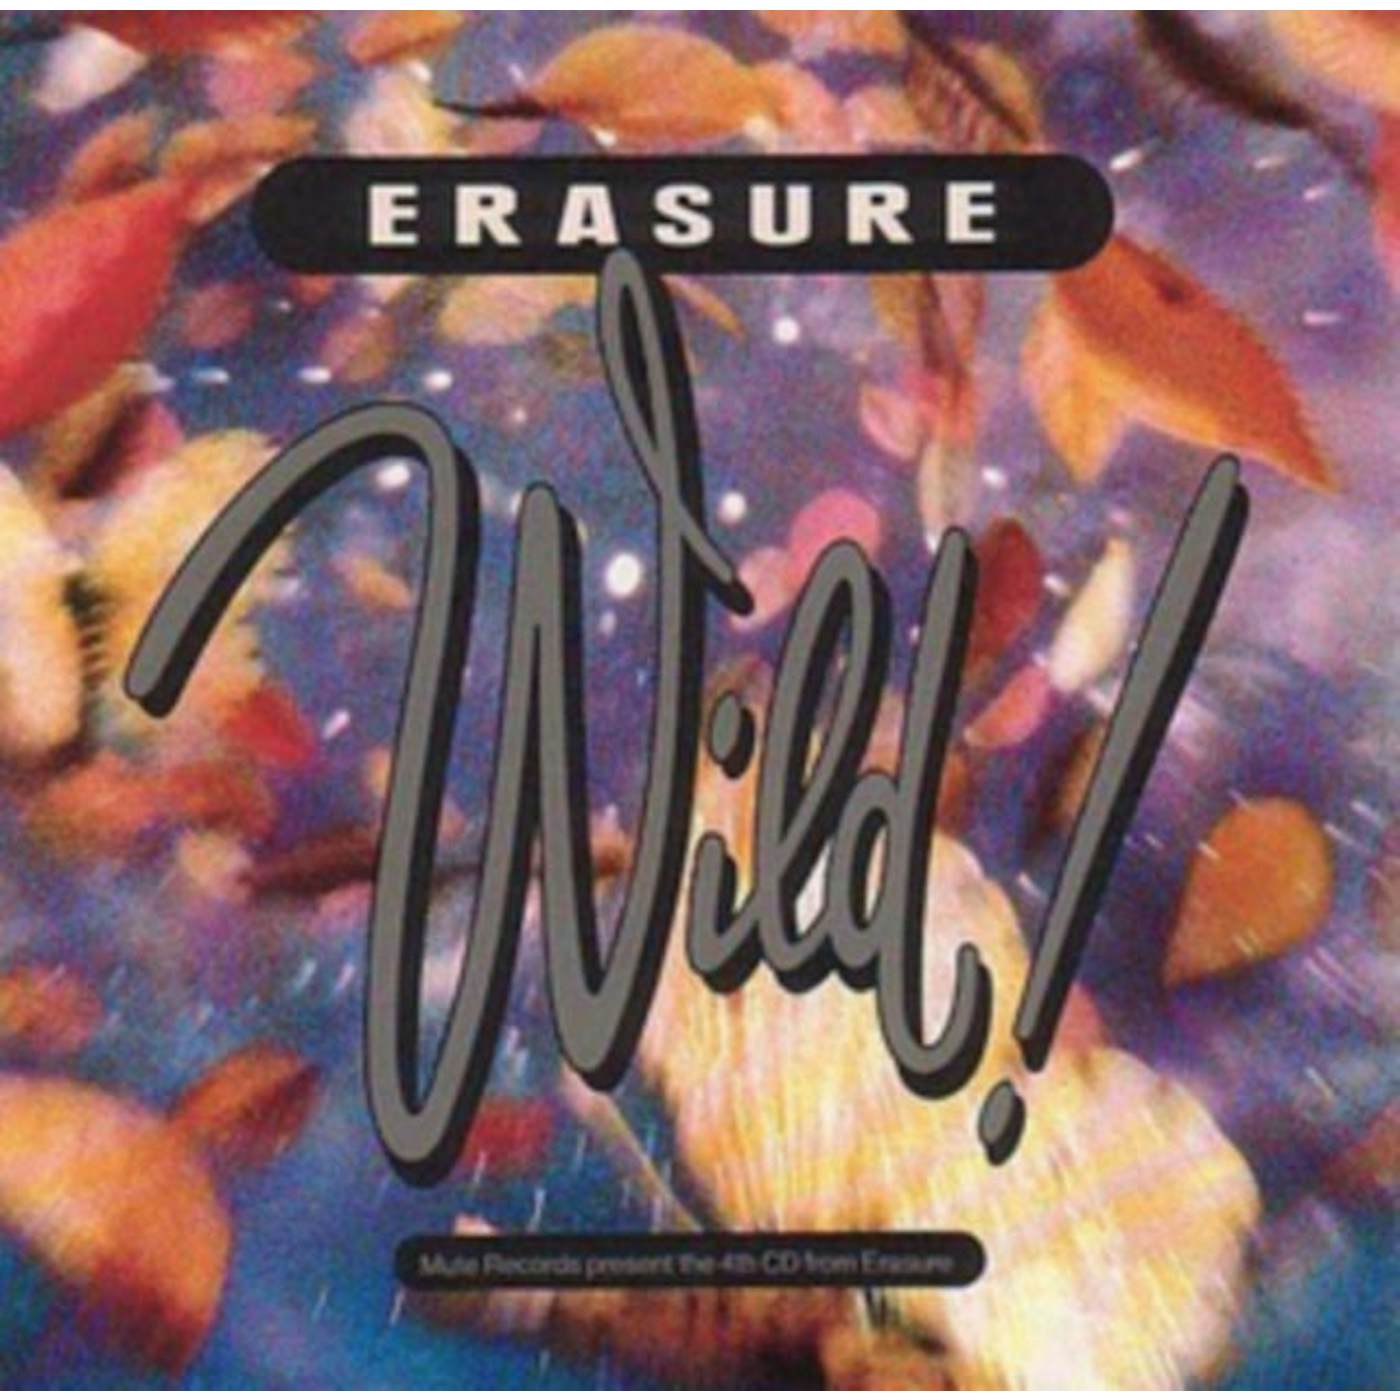 Erasure LP Vinyl Record - Wild!